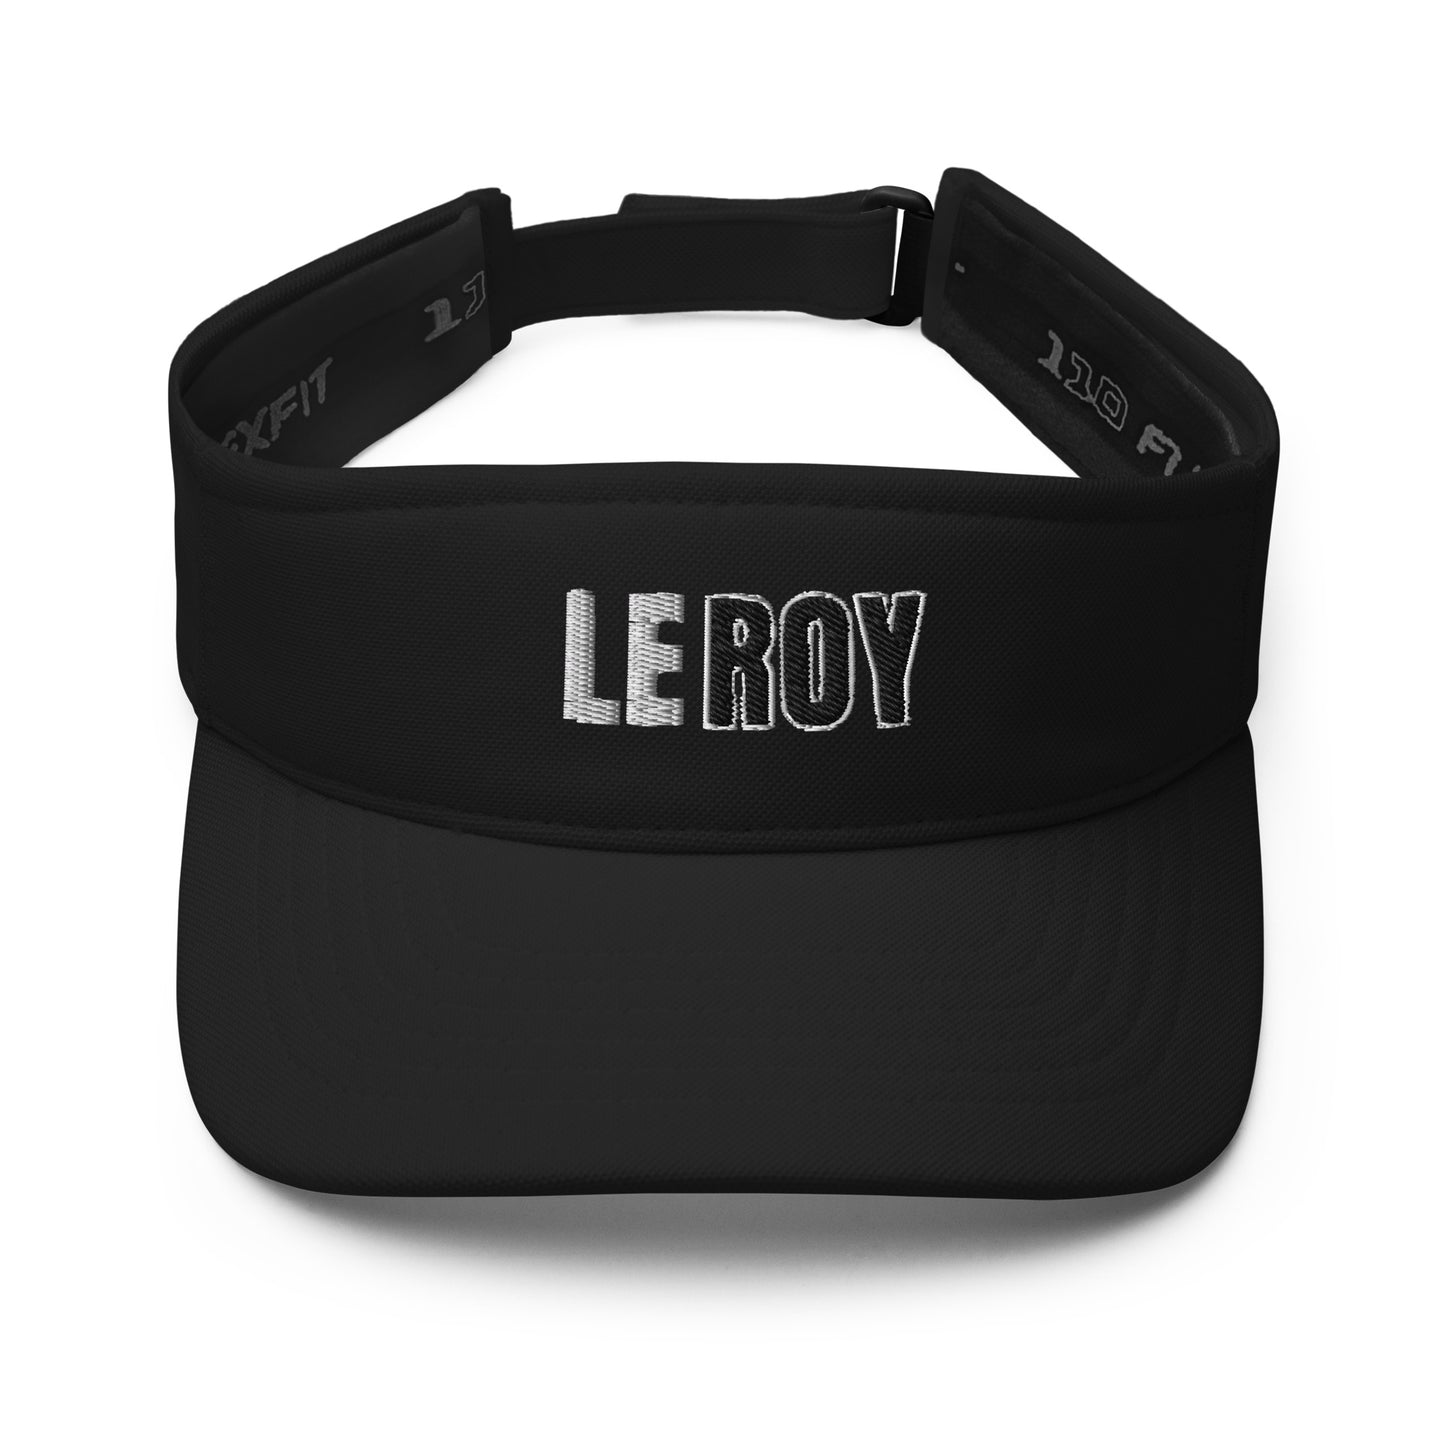 LEROY flexi-fit visor